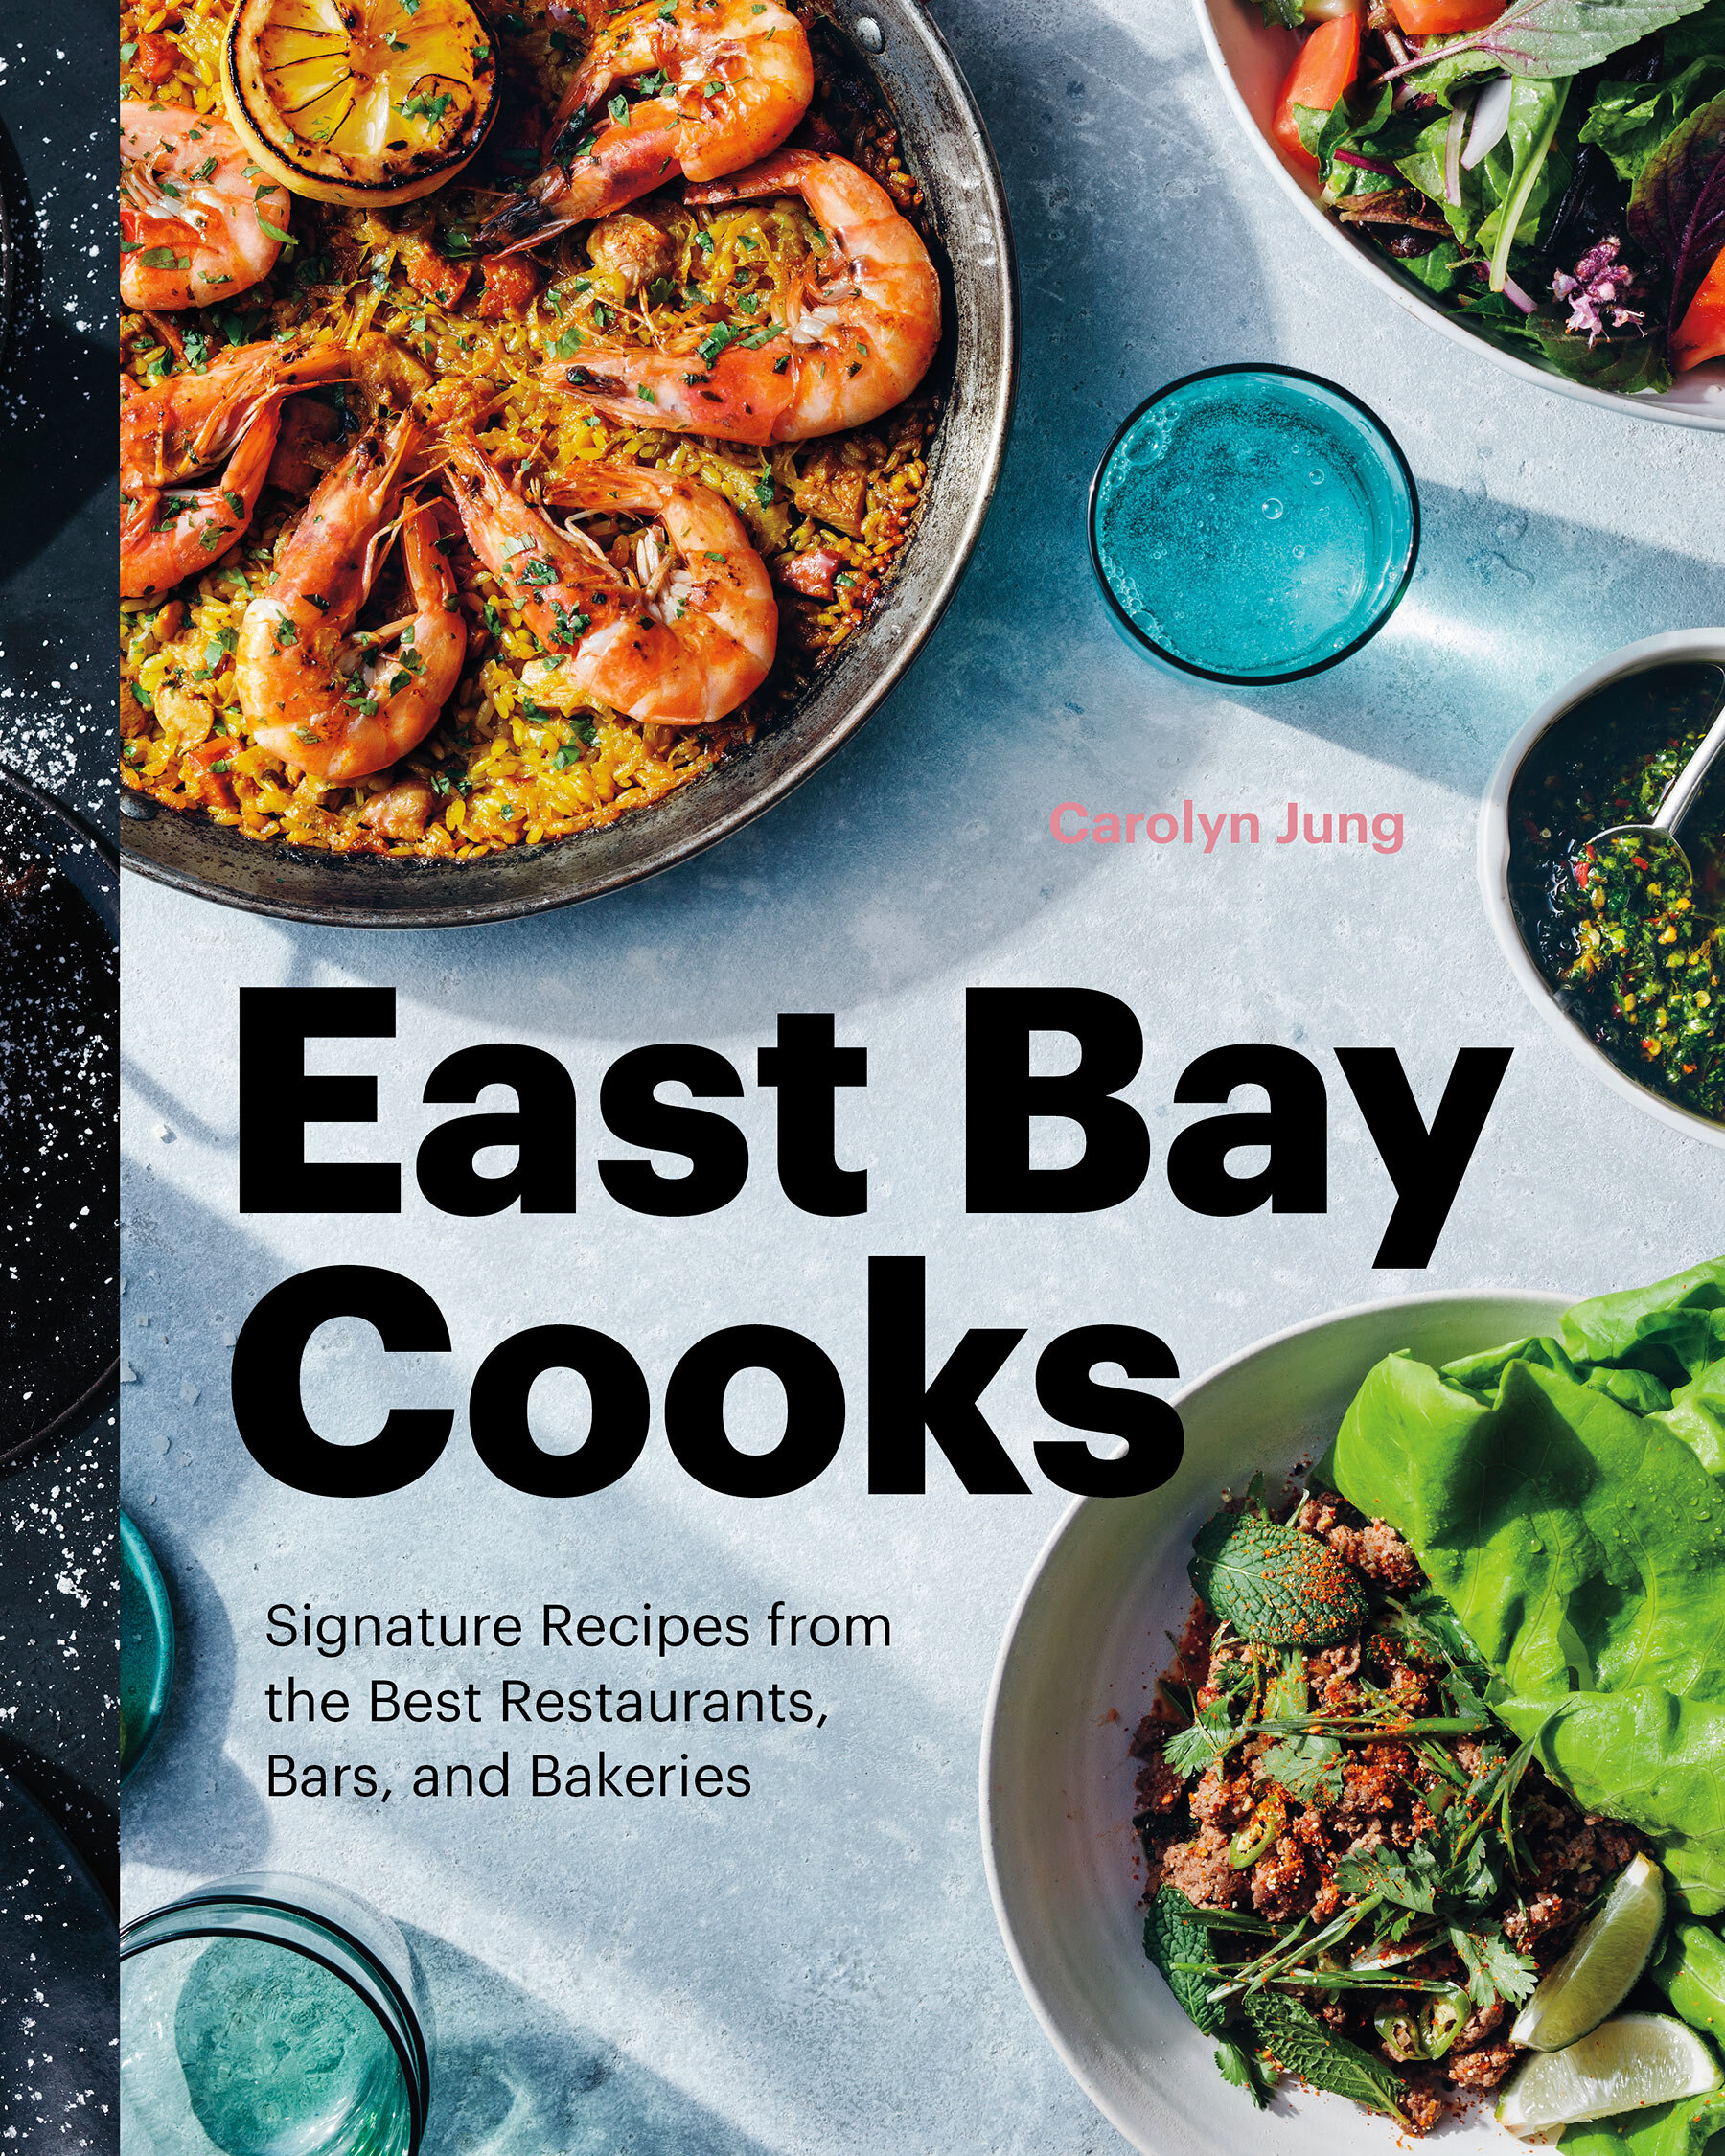 Eva-kolenko-east-bay-cooks-cookbook-recipe-oakland-chefs-restaurants-food-photographer.jpg